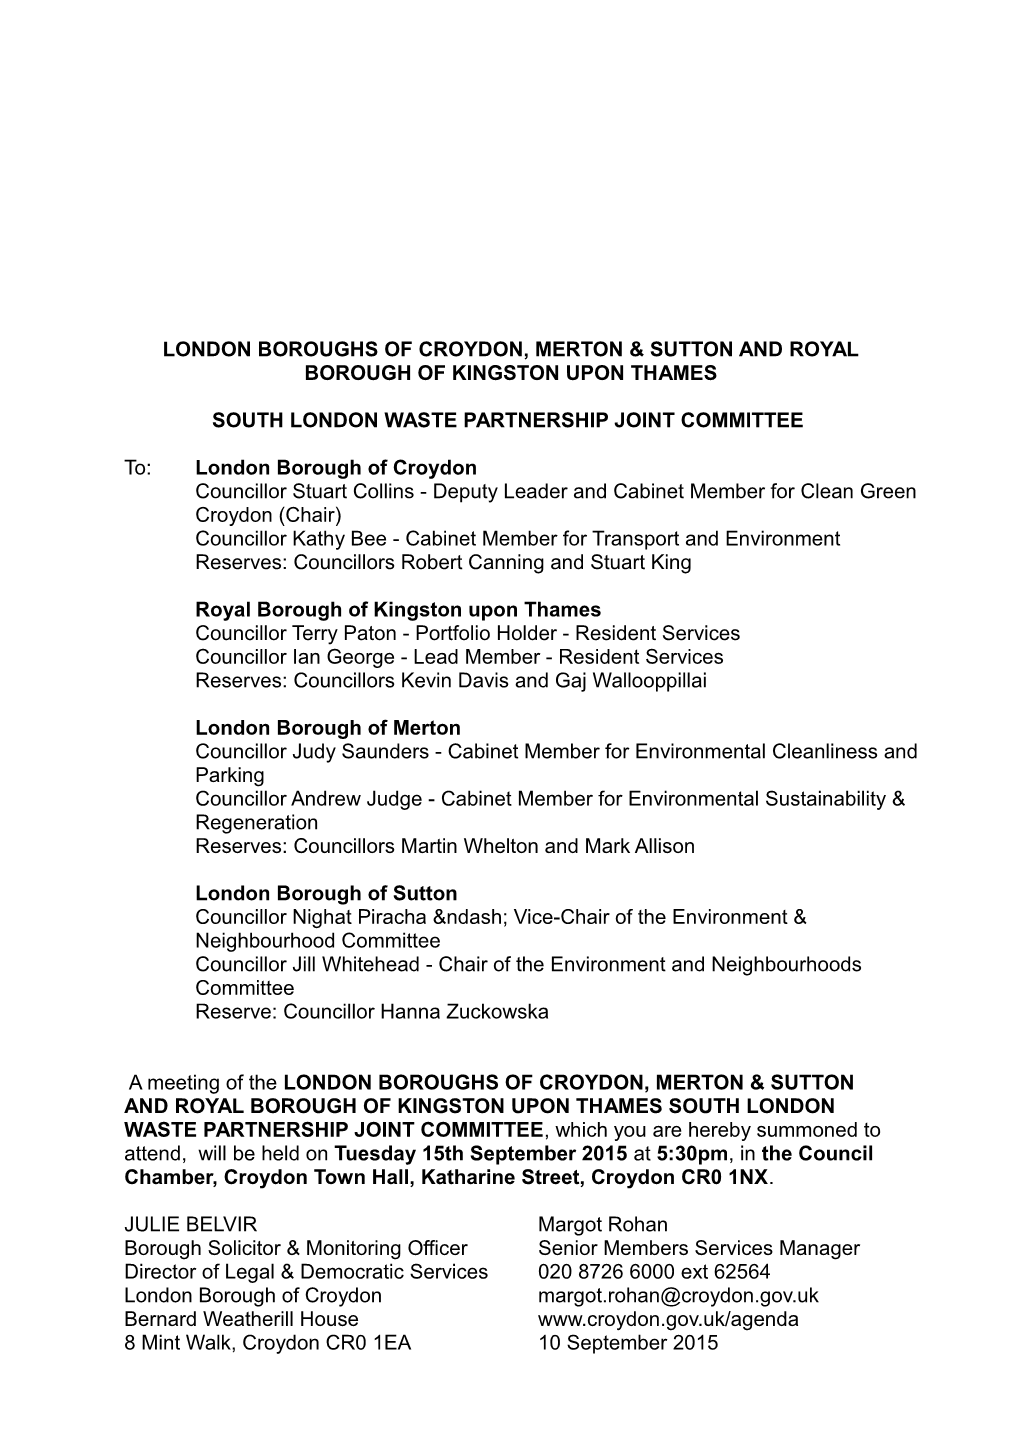 London Boroughs of Croydon, Merton & Sutton And